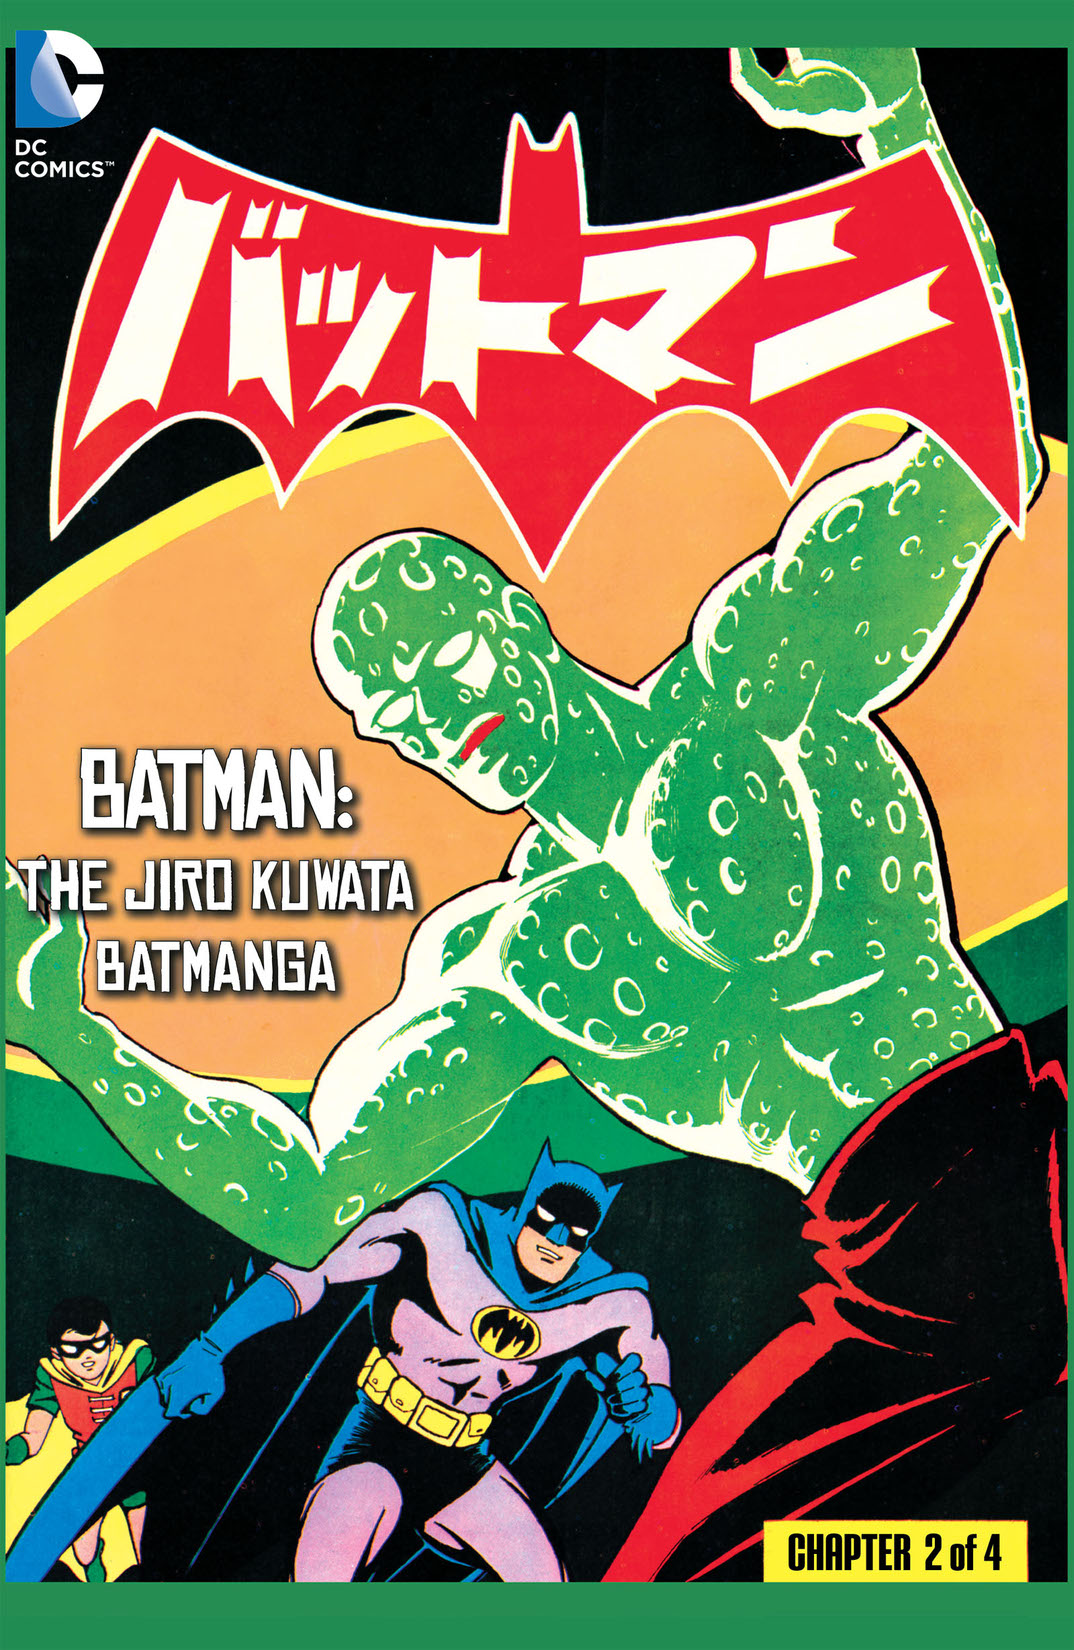 Batman: The Jiro Kuwata Batmanga #32 preview images